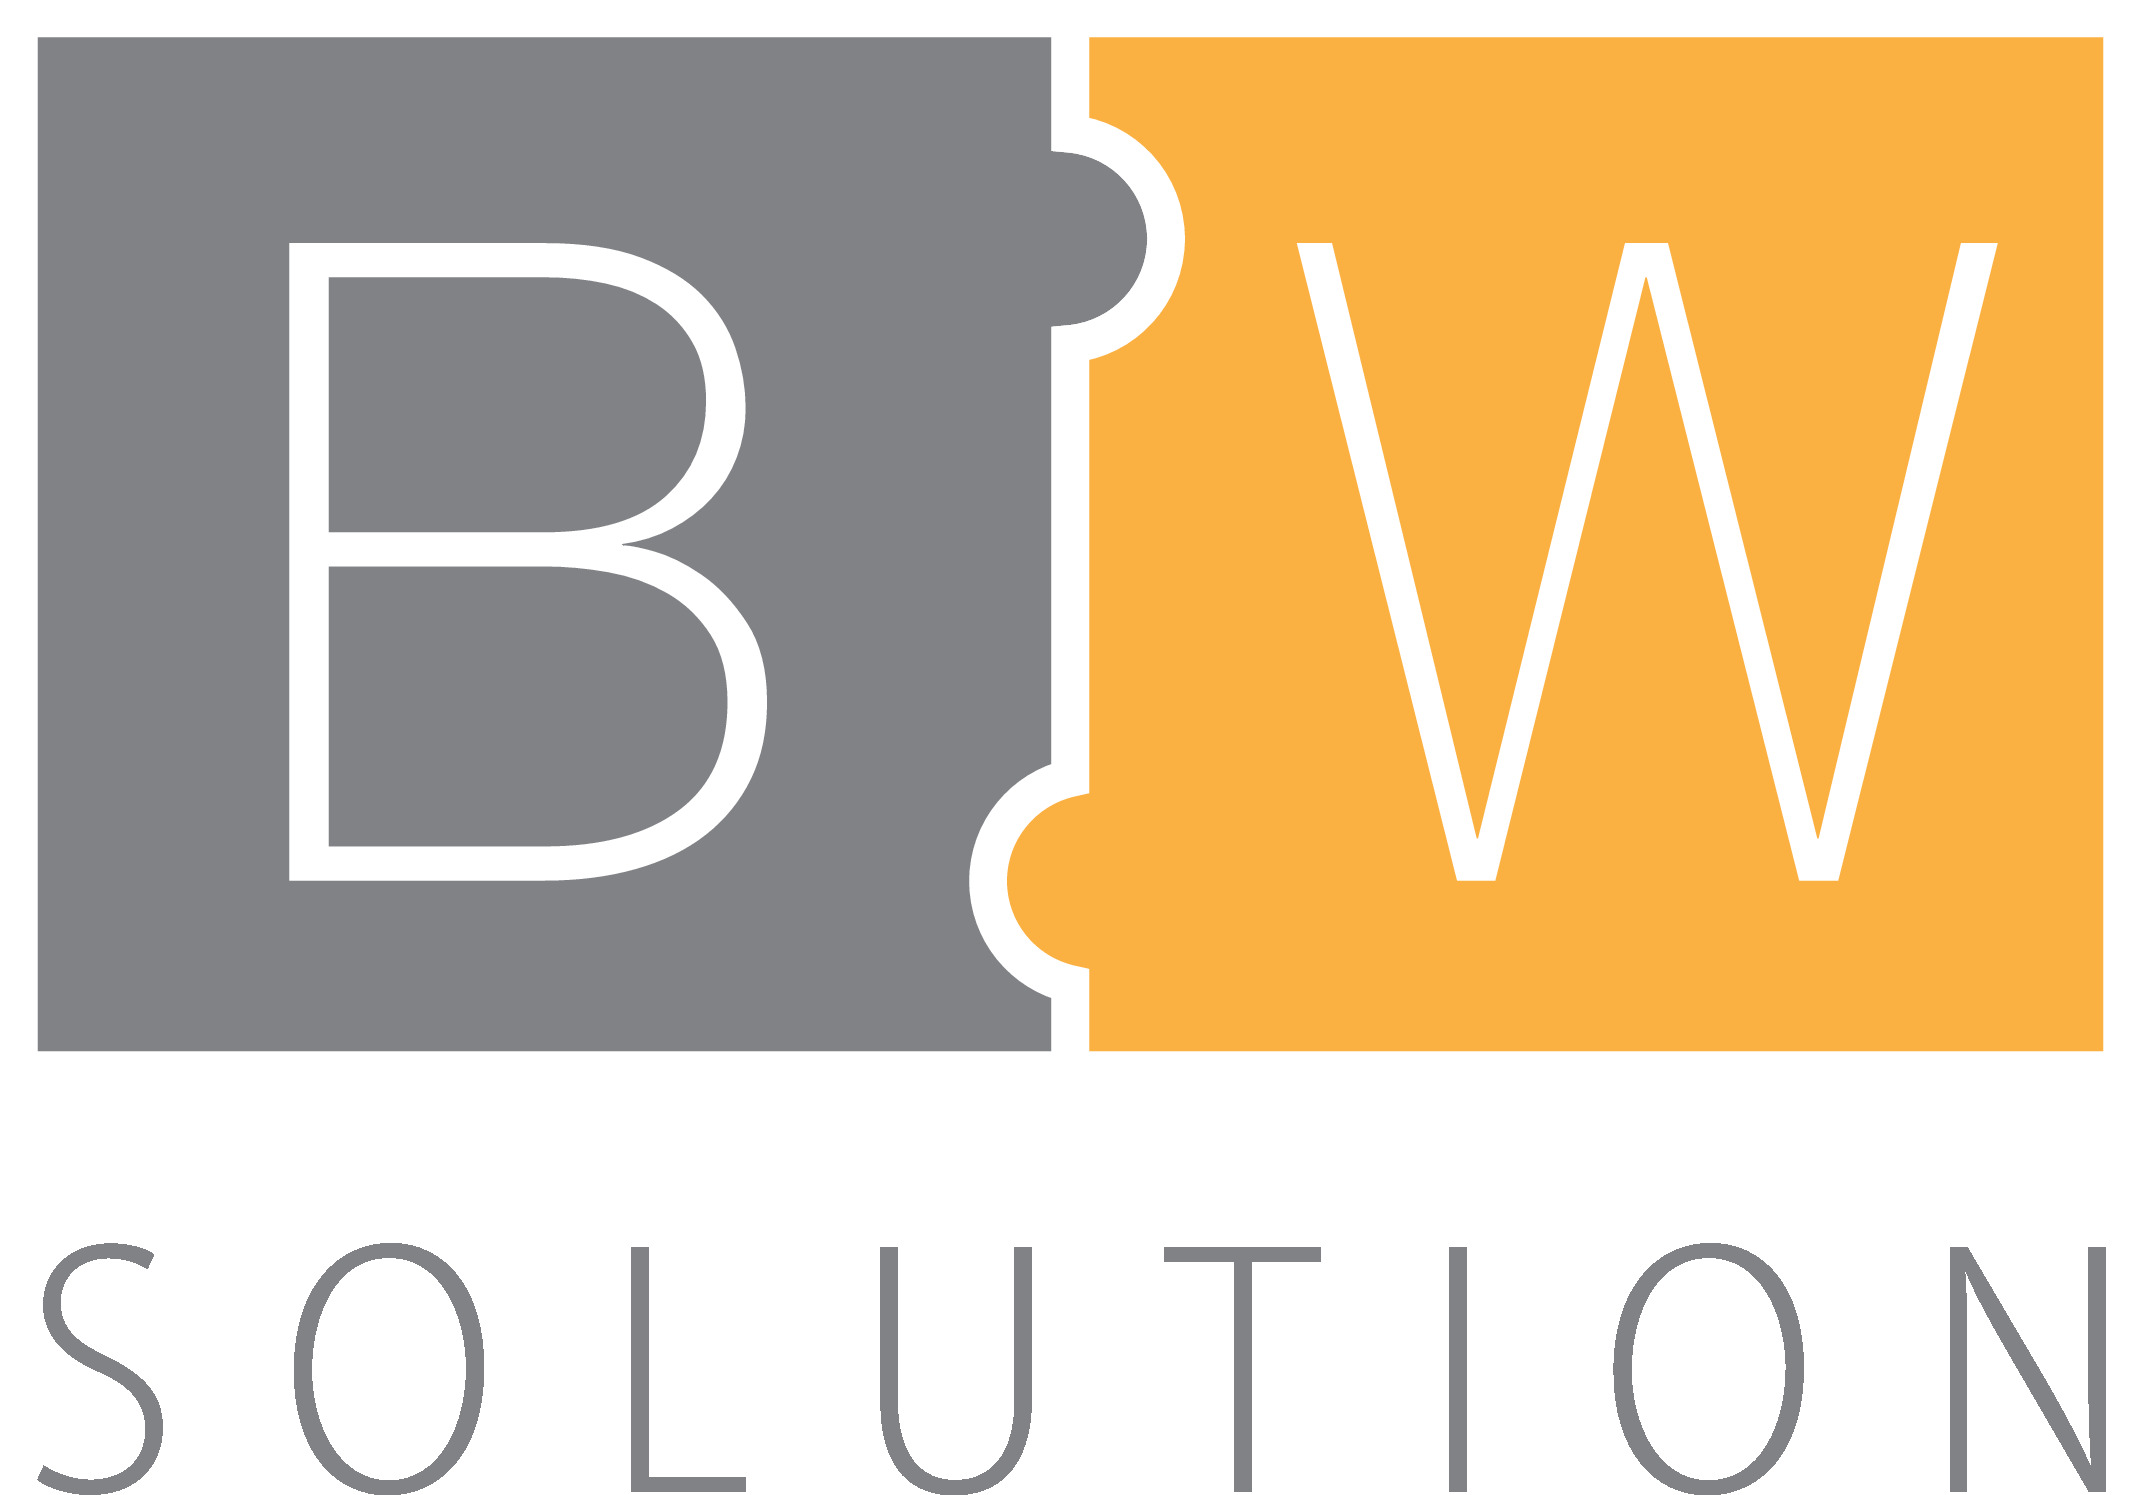 BWSolution GmbH (CarLiner)

